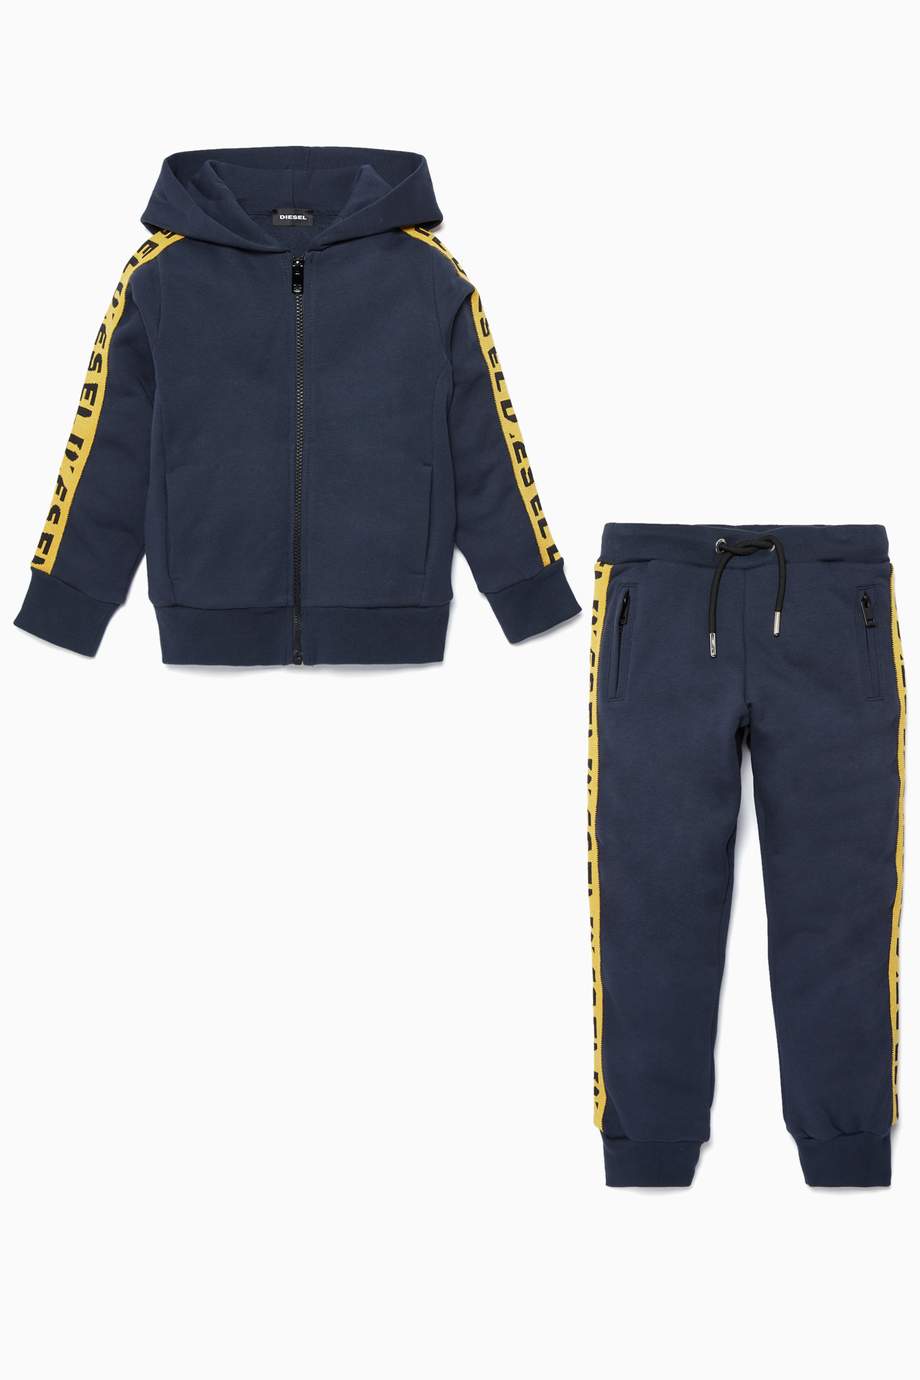 Shop Diesel Blue Navy Blue Boys Jumpsuit for Kids | Ounass